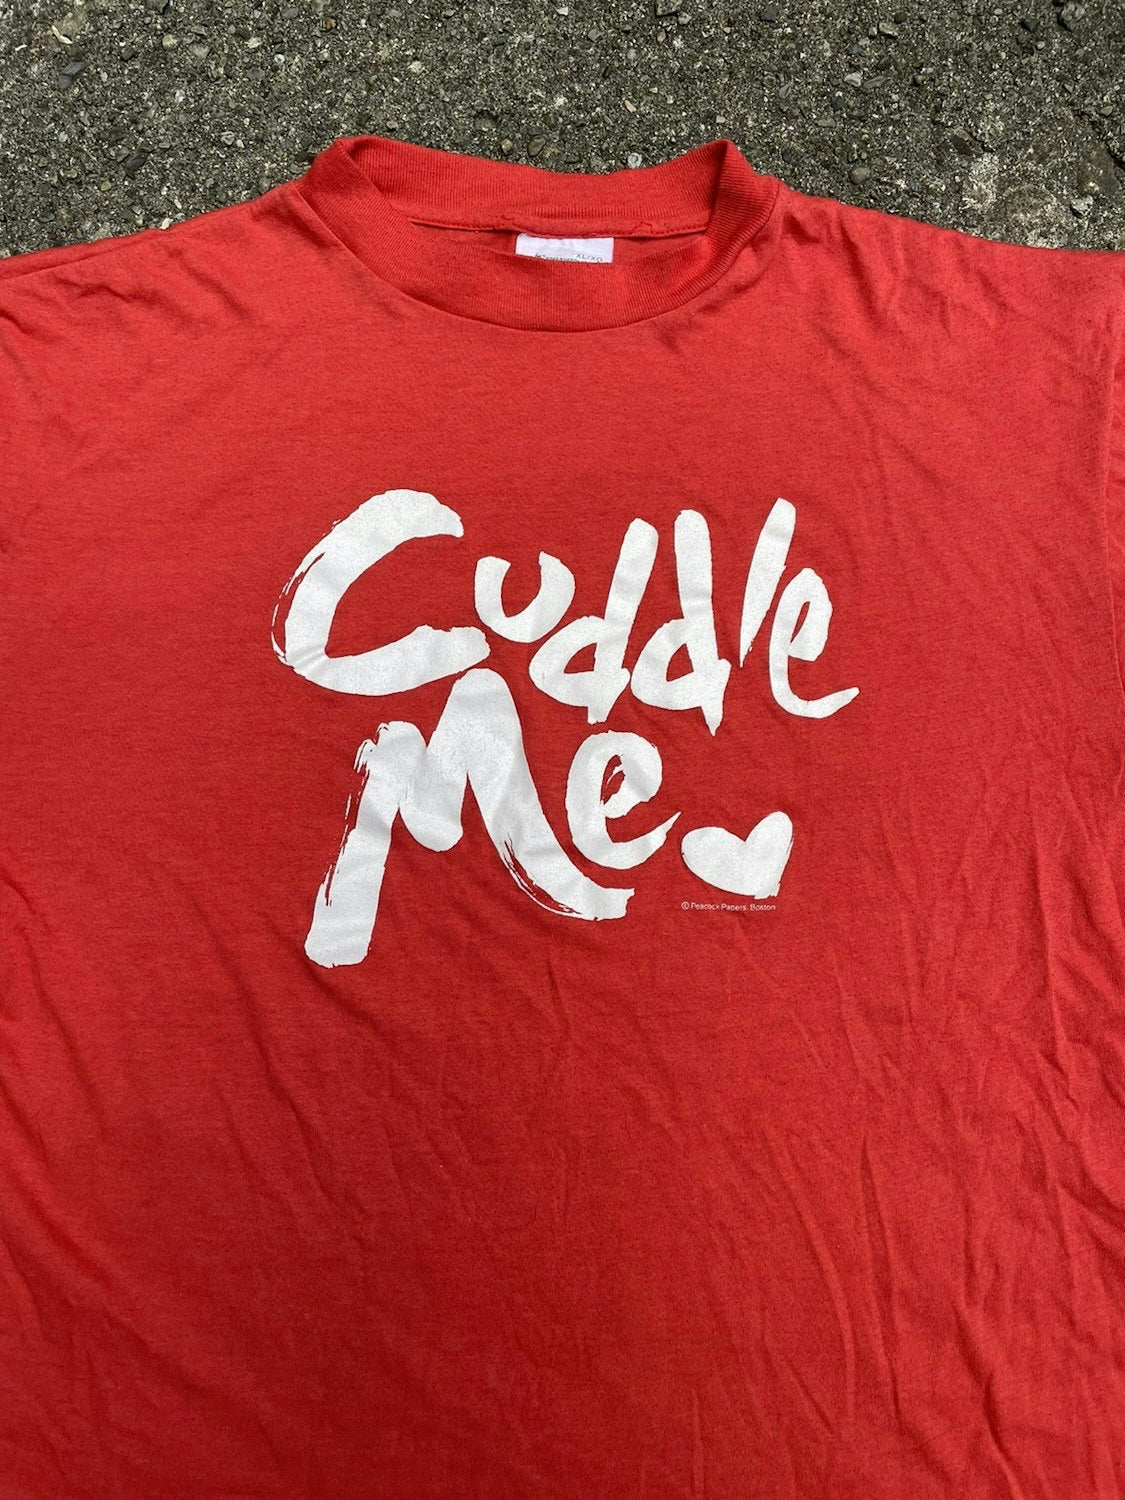 1980's 'Cuddle Me' Graphic T-Shirt - XL